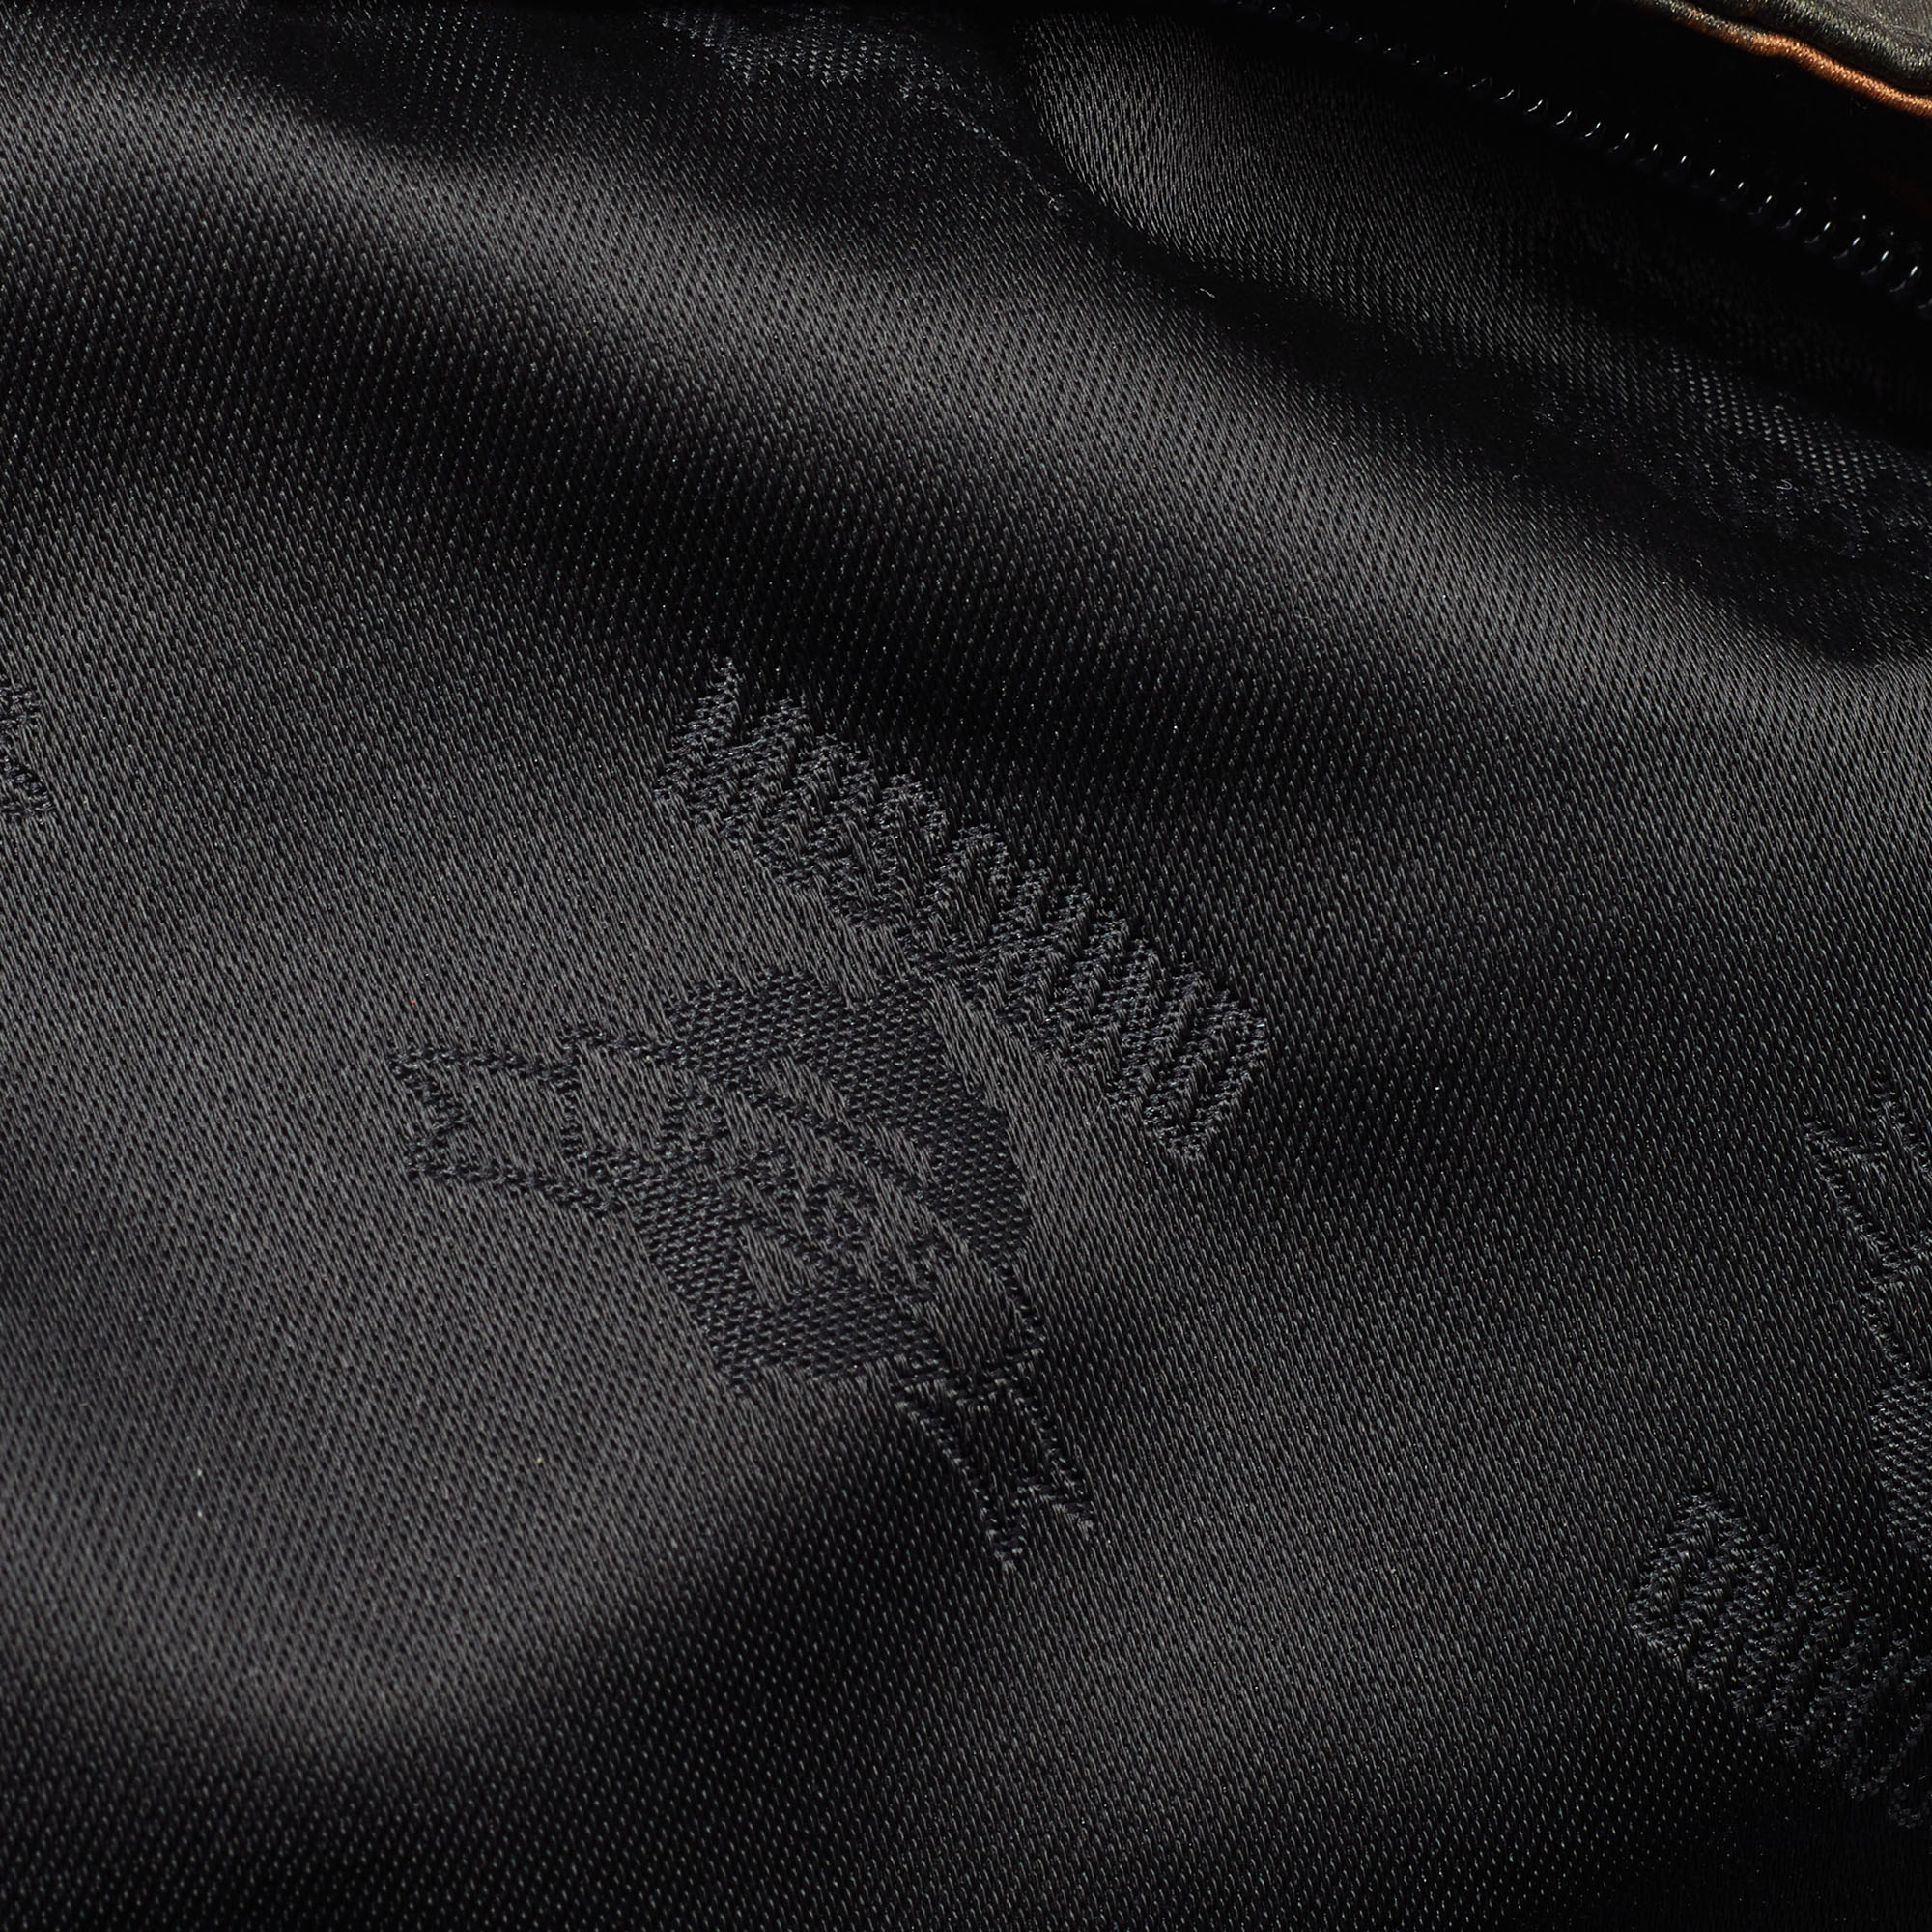 Moschino Brown/Black Zebra Print Fabric And Leather Zip Tote